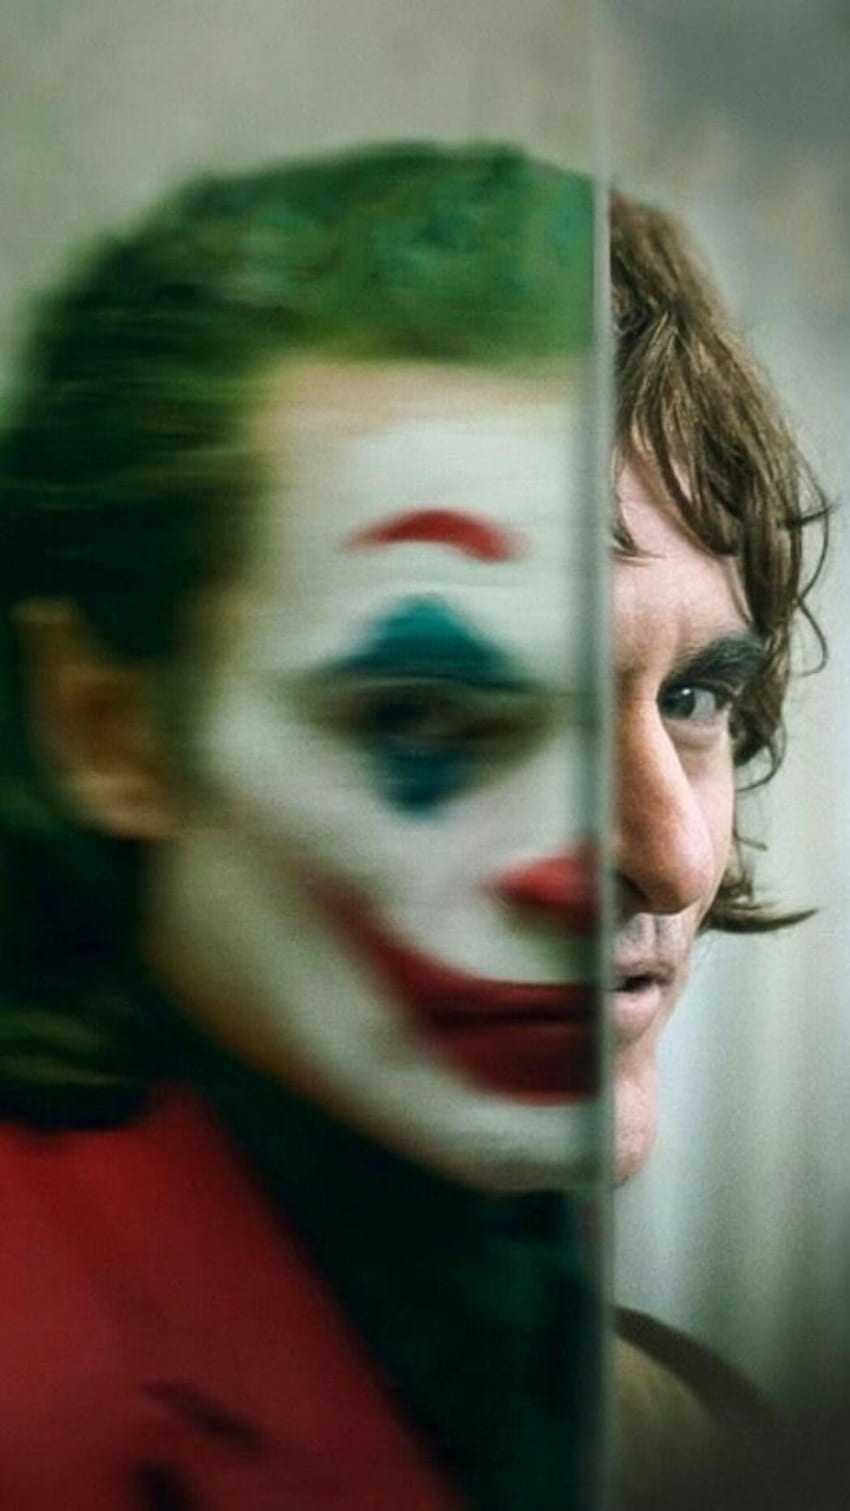 Cartel de Joker, Película, Arthur Fleck, ilustración, Joaquin Phoenix fondo de pantalla del teléfono